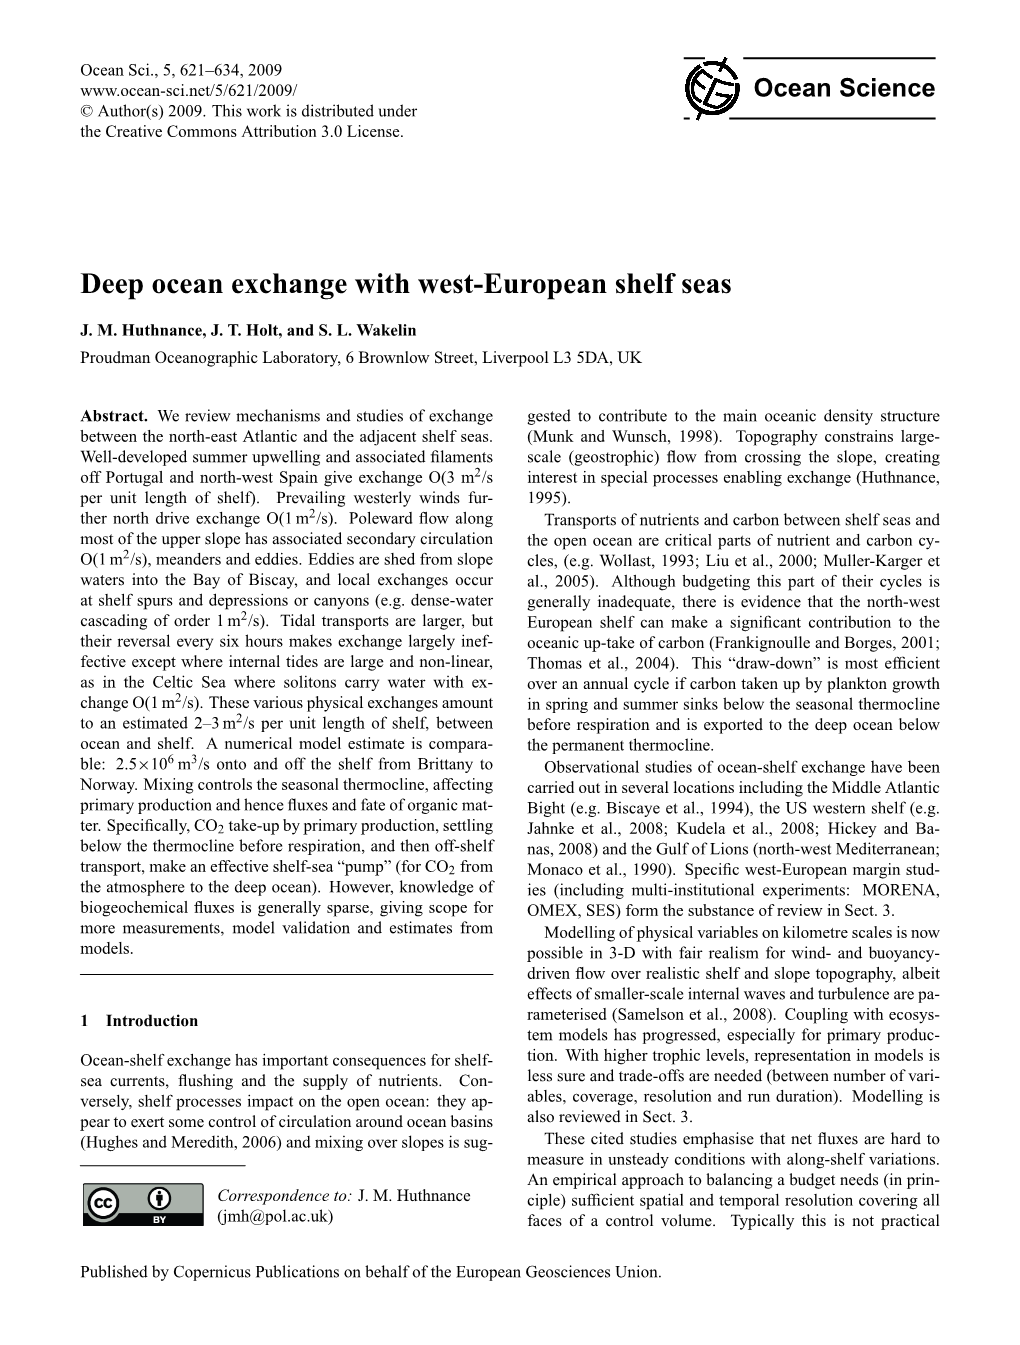 Deep Ocean Exchange with West-European Shelf Seas